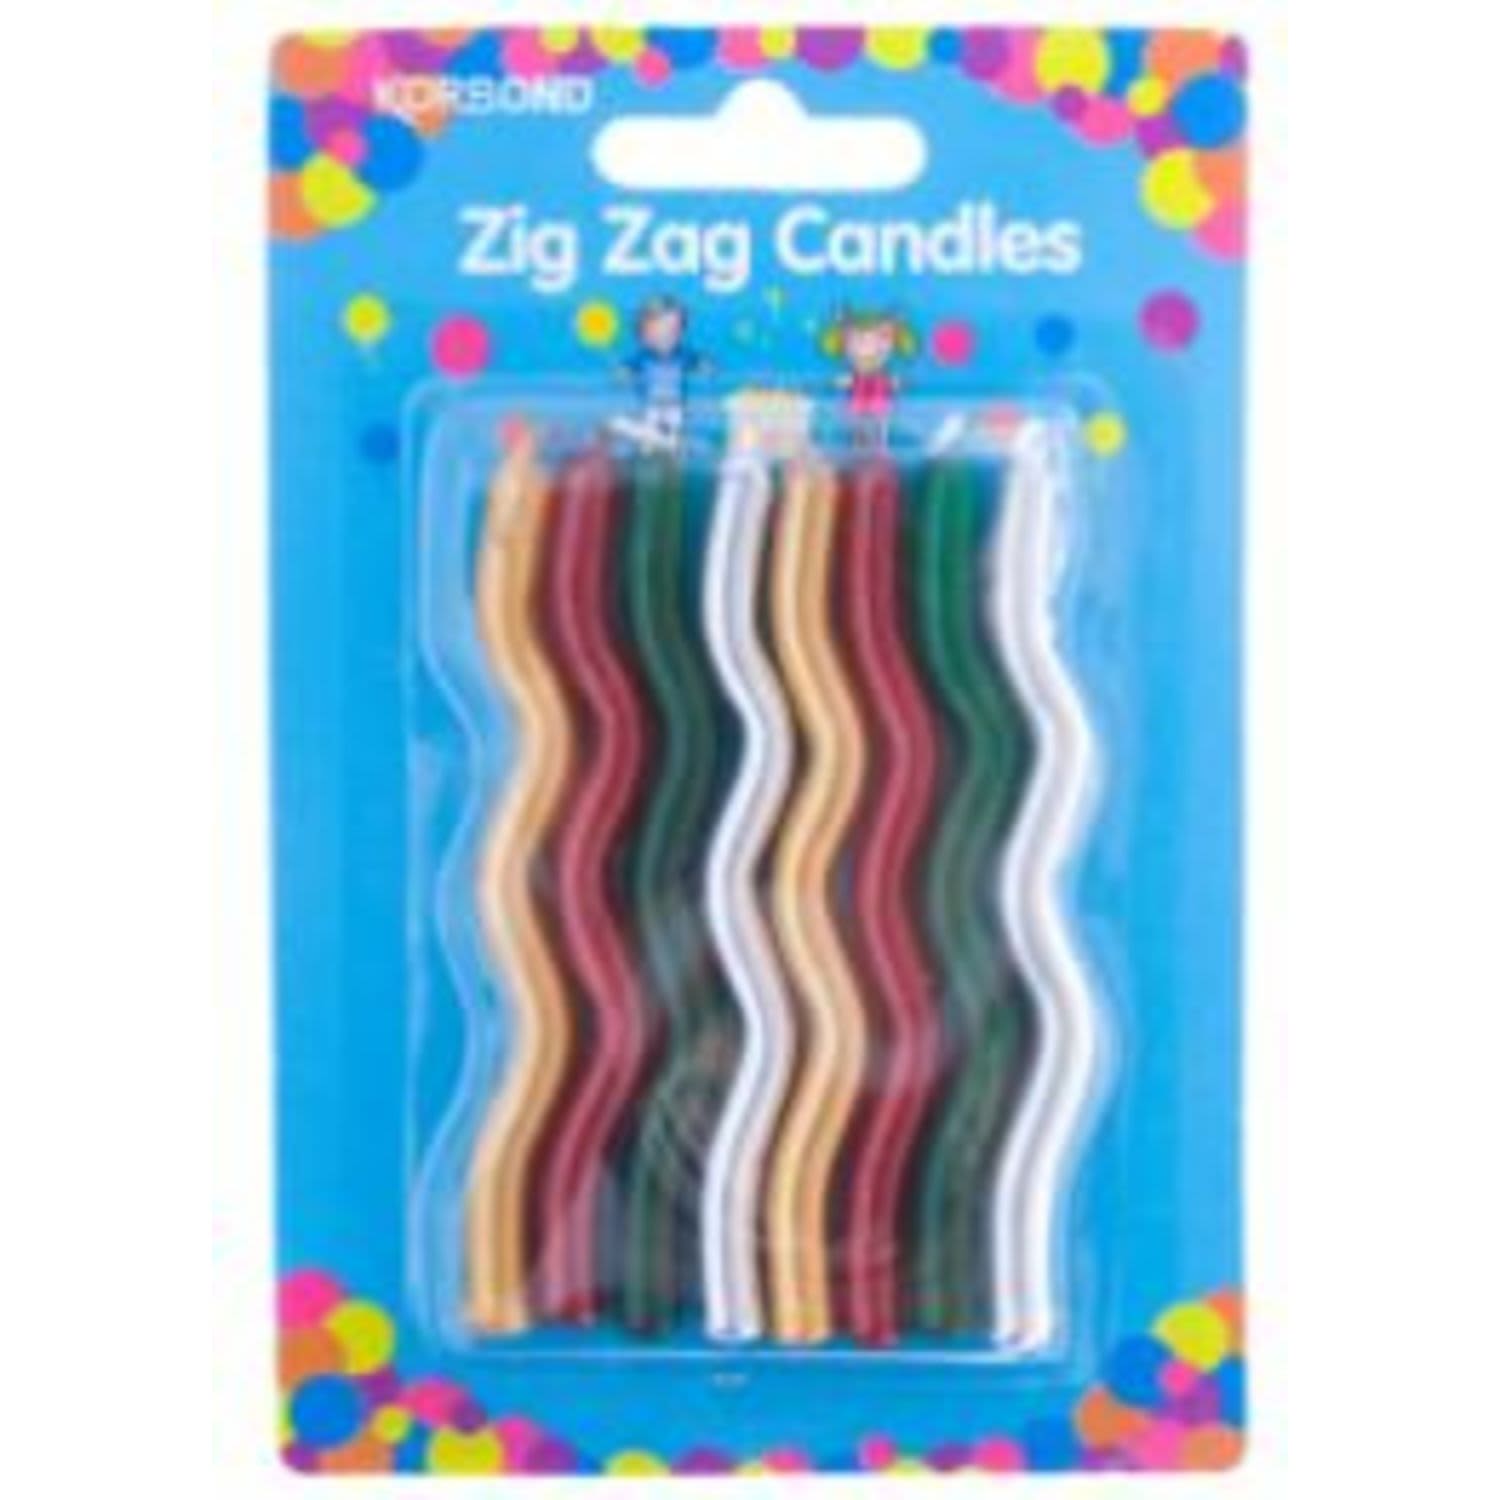 Korbond Zig Zag Candles, 1 Each